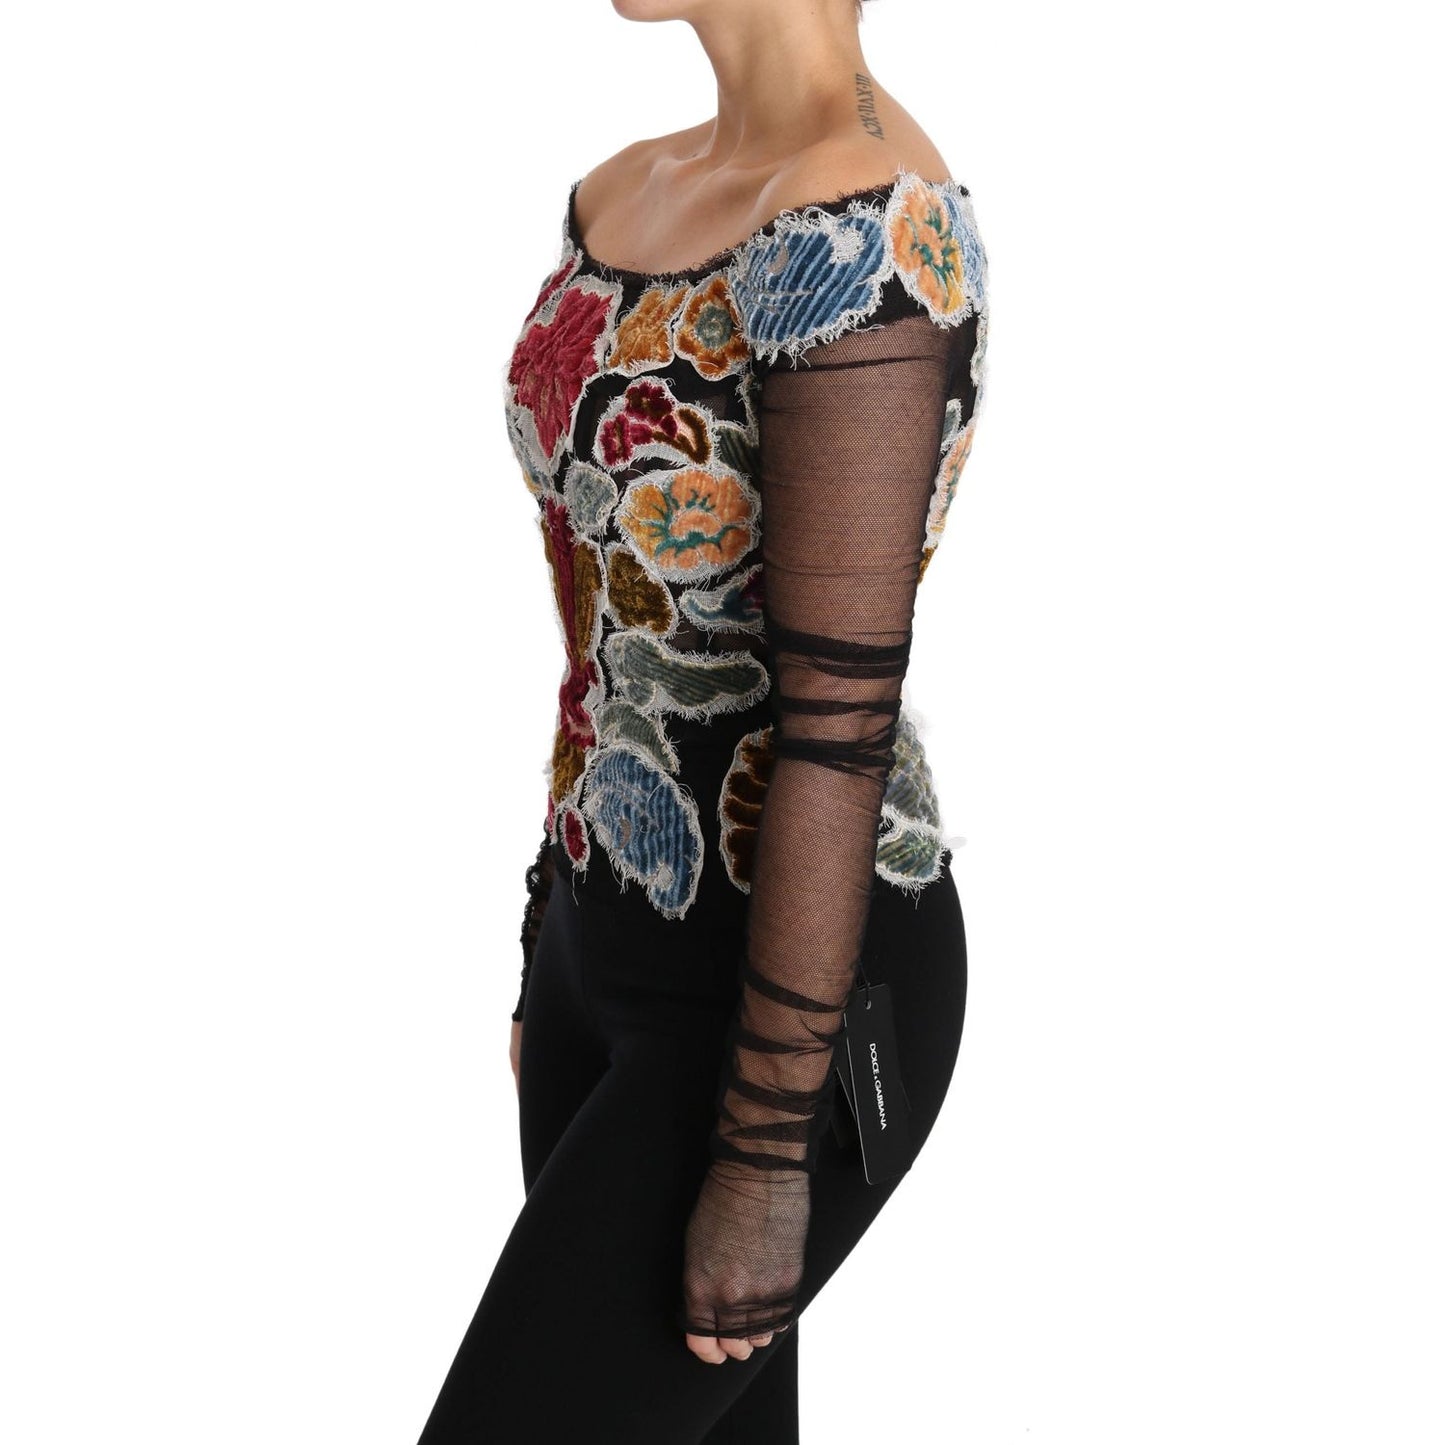 Dolce & Gabbana Elegant Floral Applique Long Sleeve Top elegant-floral-applique-long-sleeve-top